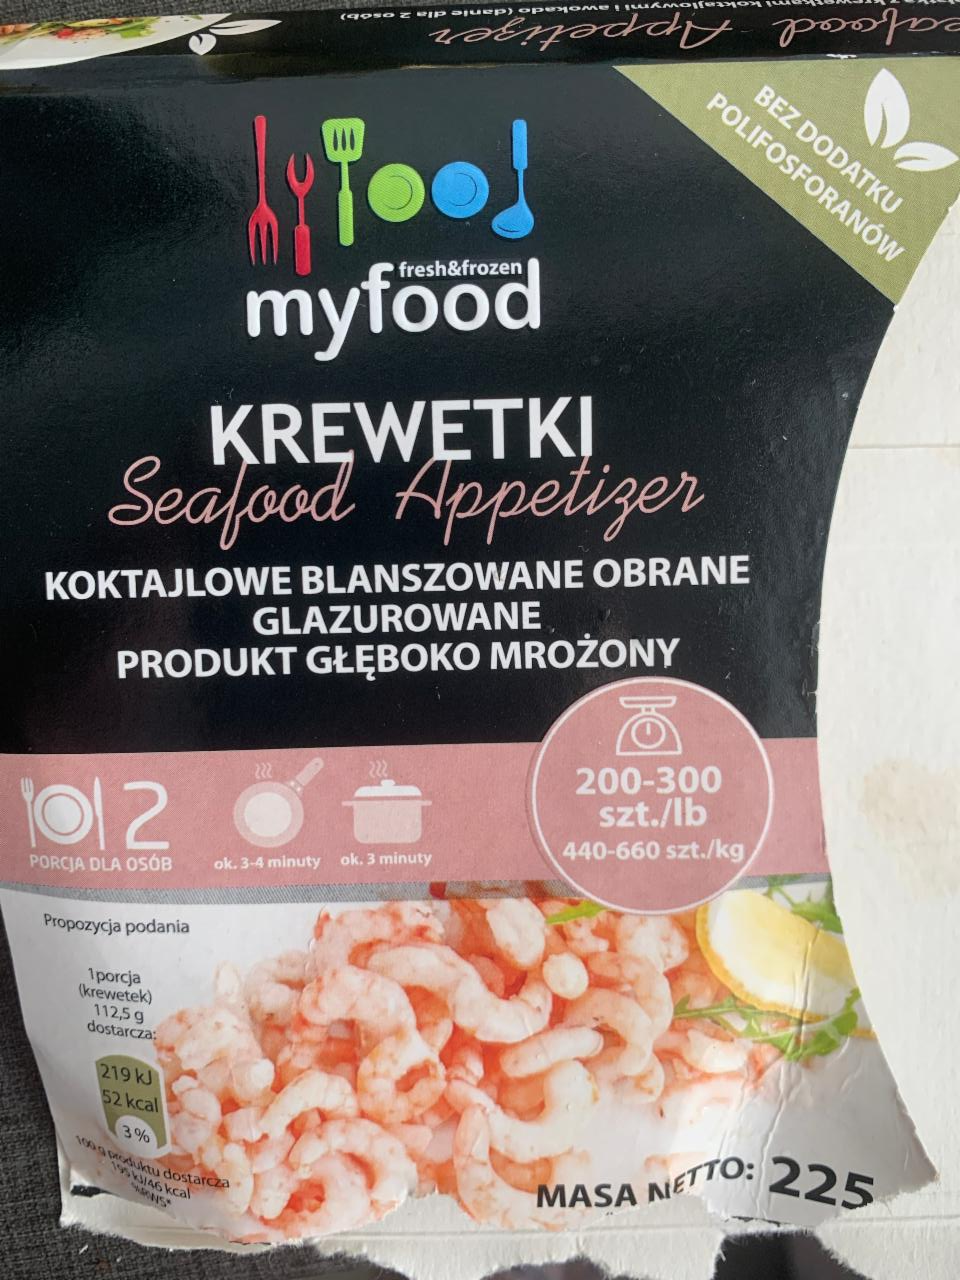 Fotografie - Krewetki Seafood Appetizer myfood